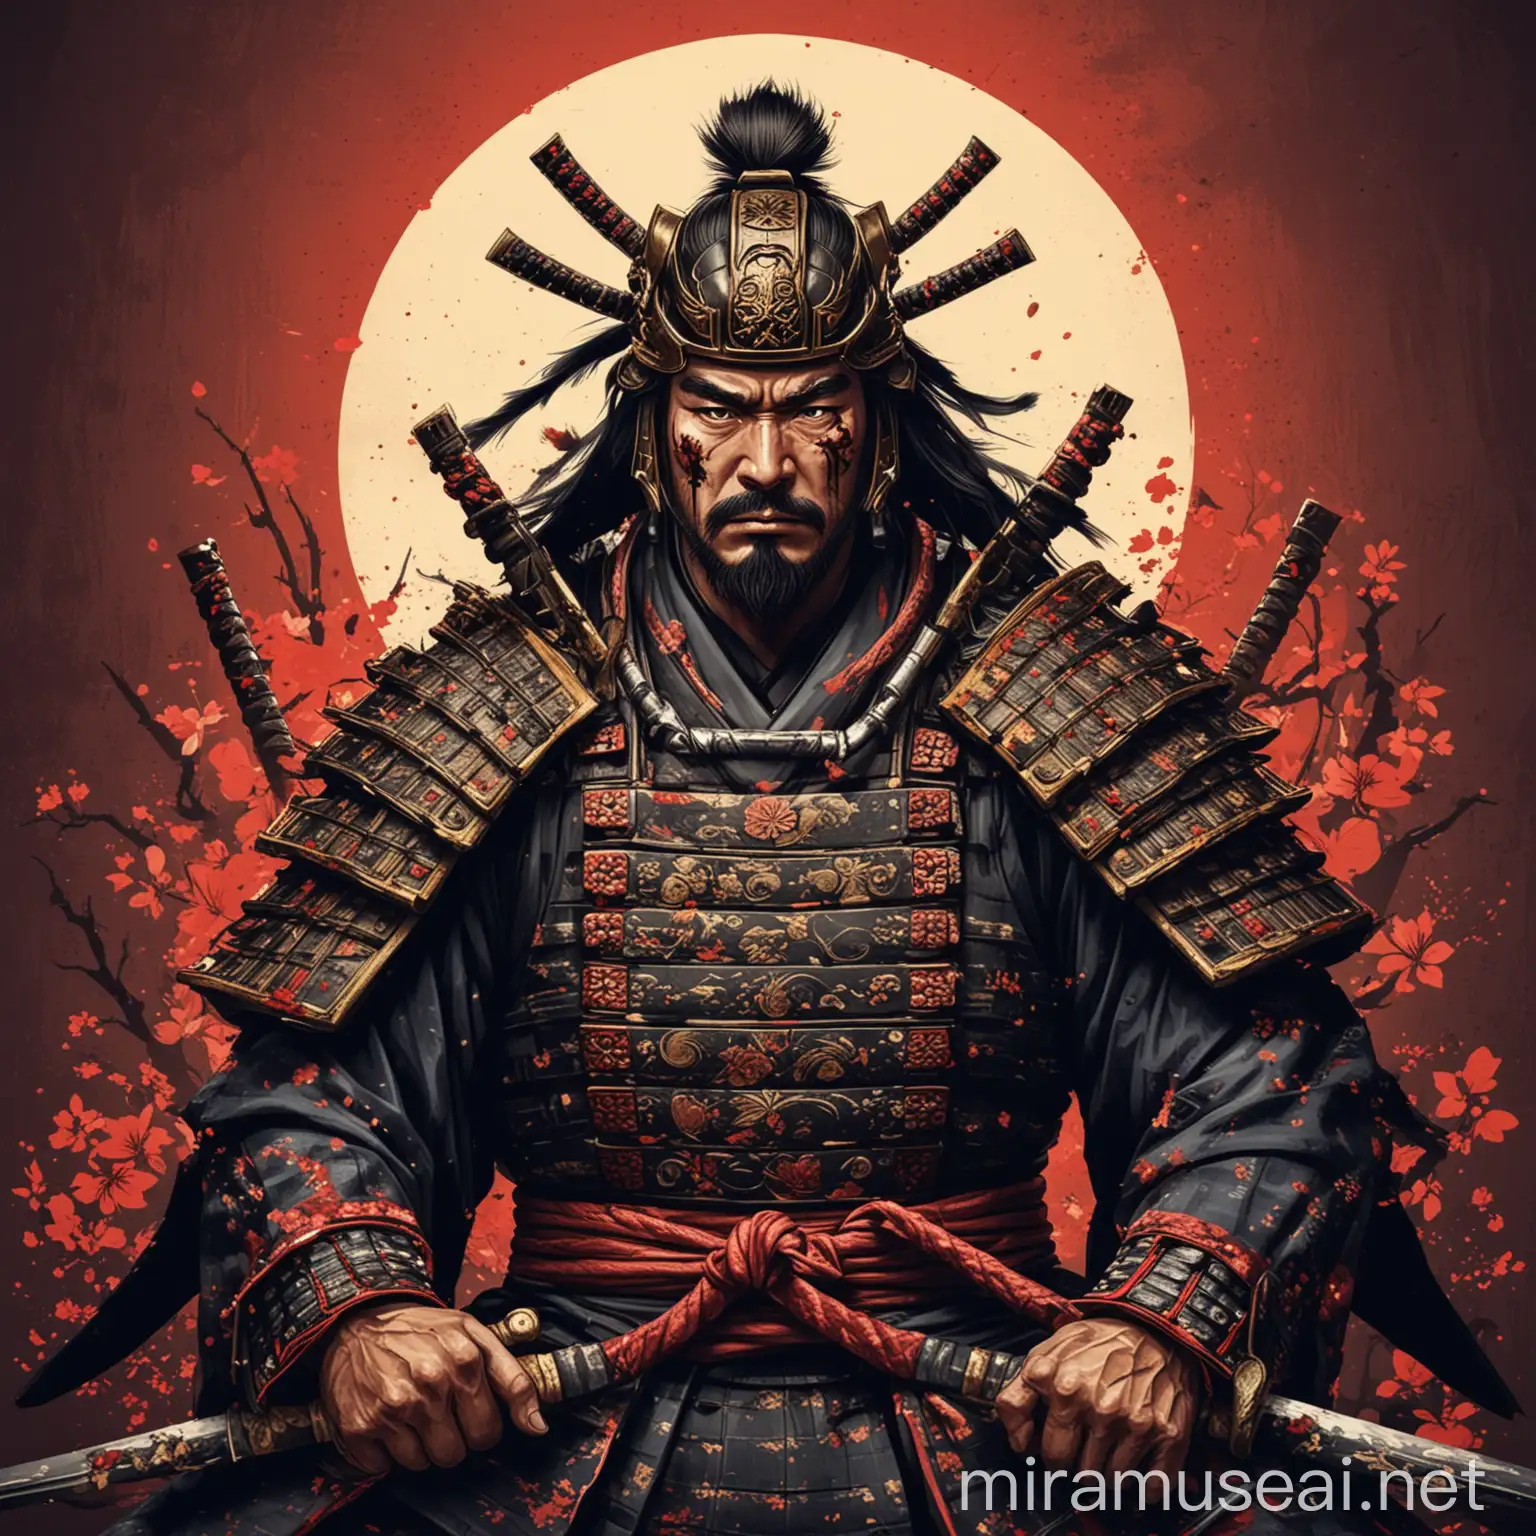 create me a vector digital art depicting a "Shogun" in the picture
